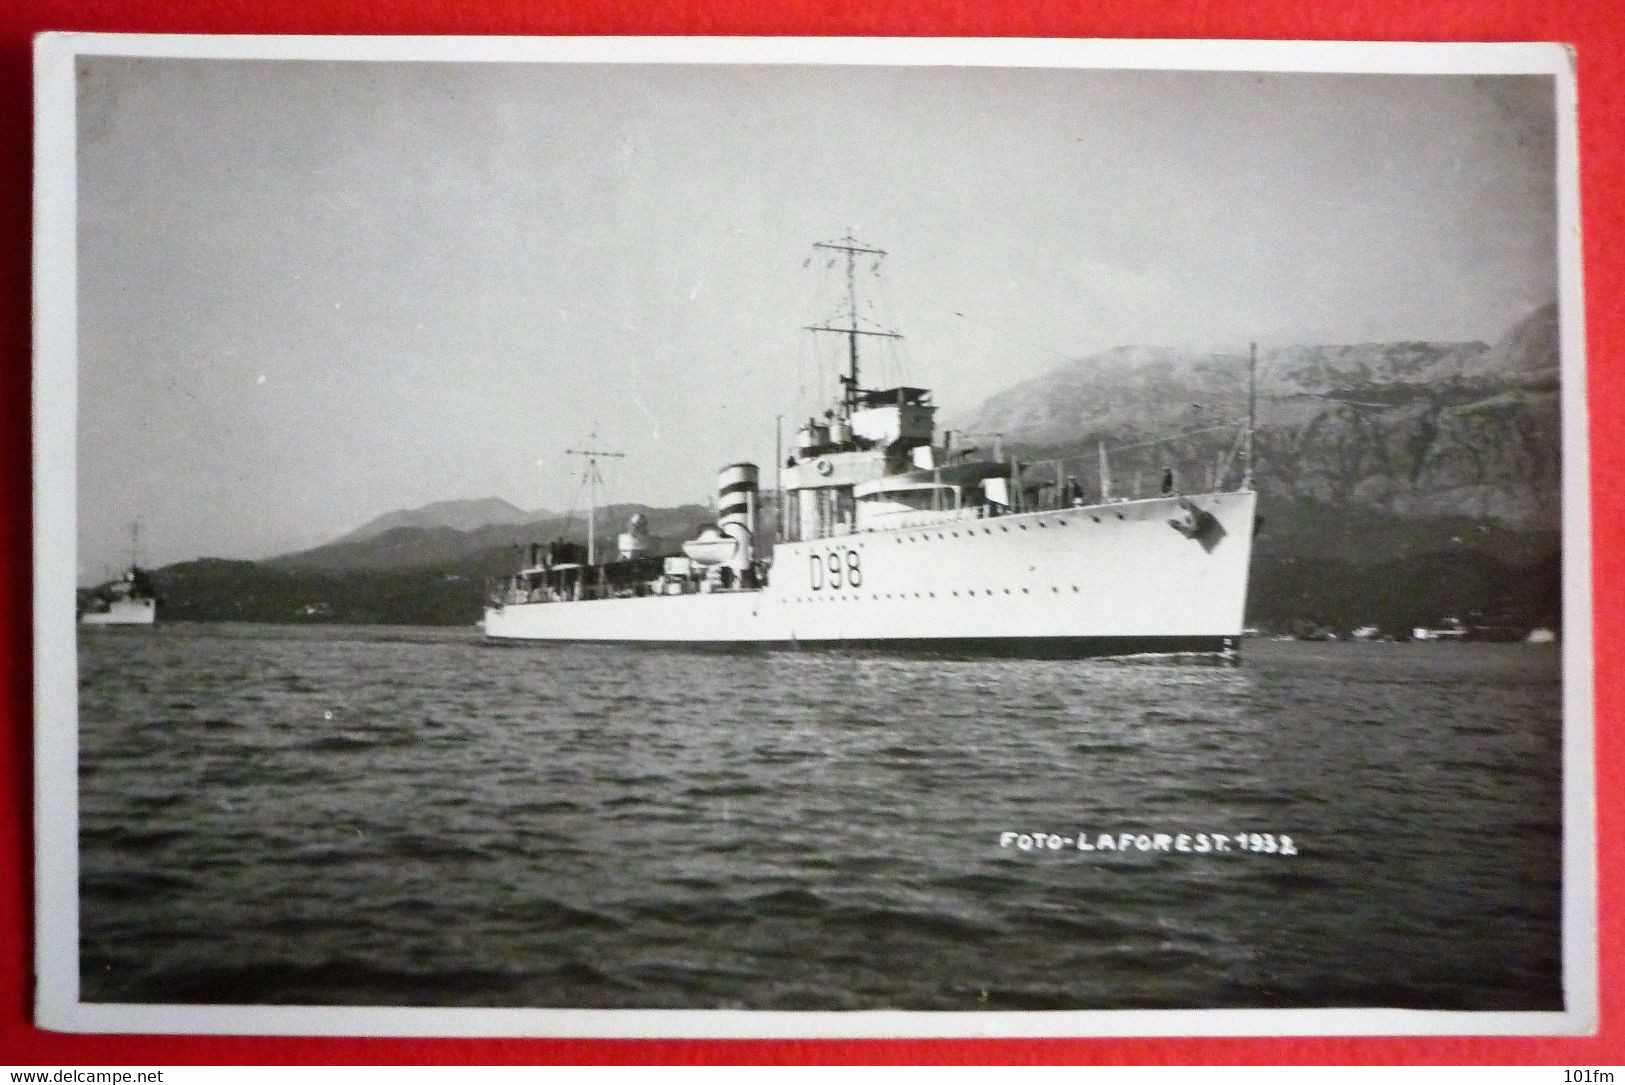 HMS WOLSEY W CLASS DESTROYER IN CATTARO MONTENEGRO 1932 - Guerre